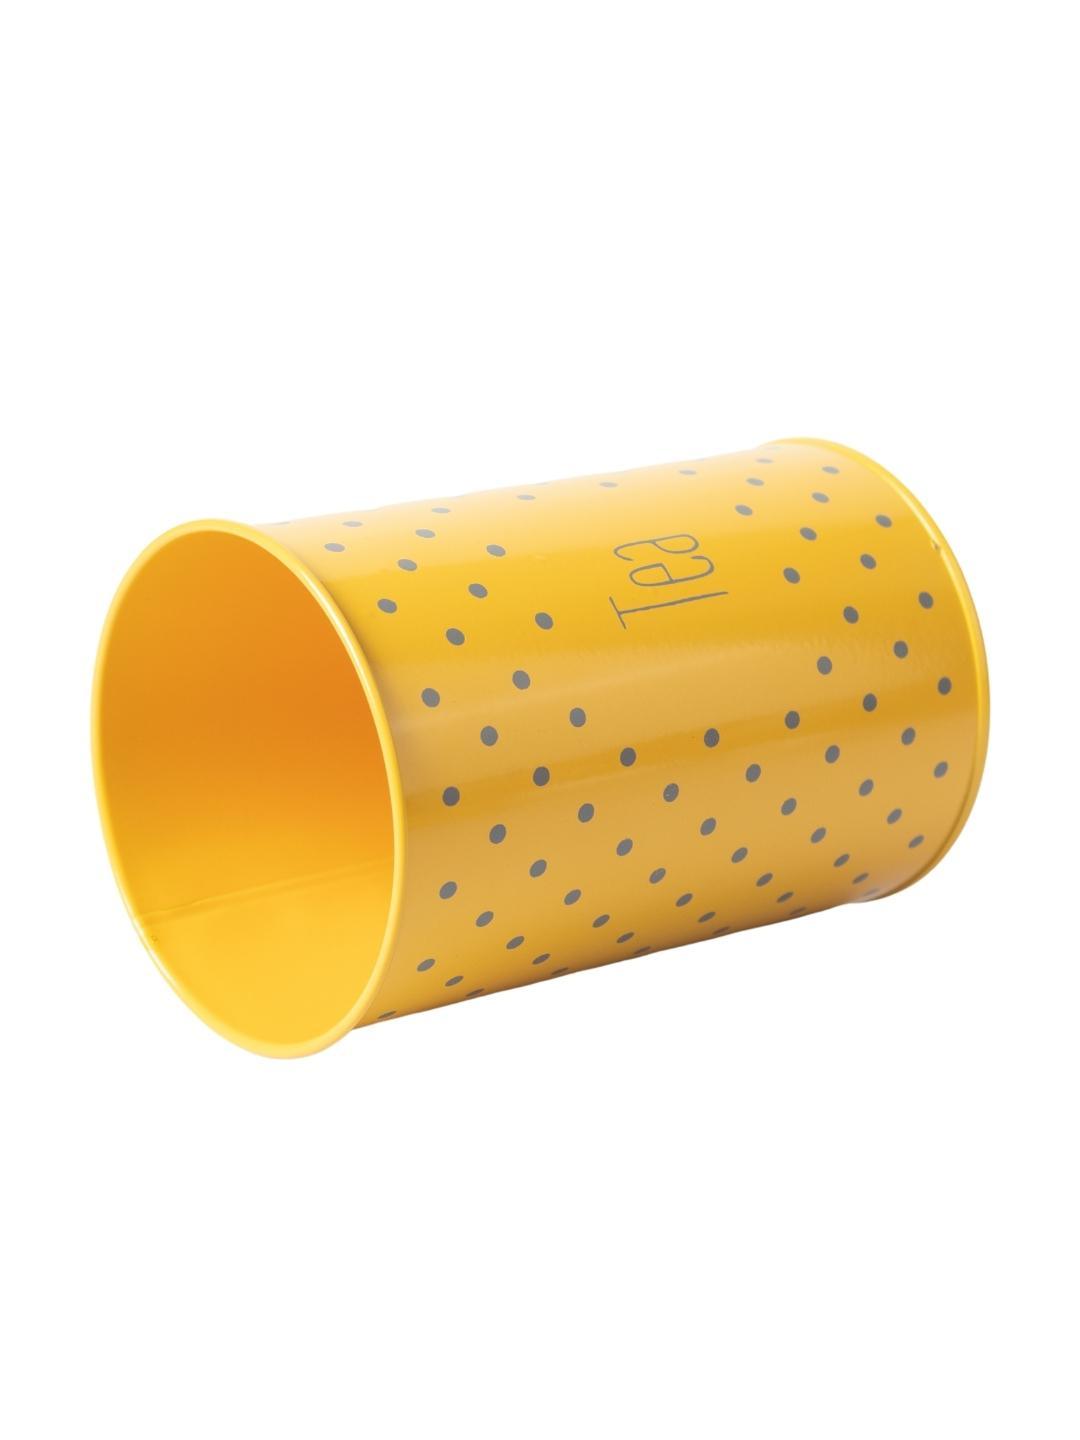 Tea & Sugar Jar (Each 900 Ml) + Cookie & Namkeen Jar (Each 1700 Ml) - Polka Dot Yellow, Set Of 4